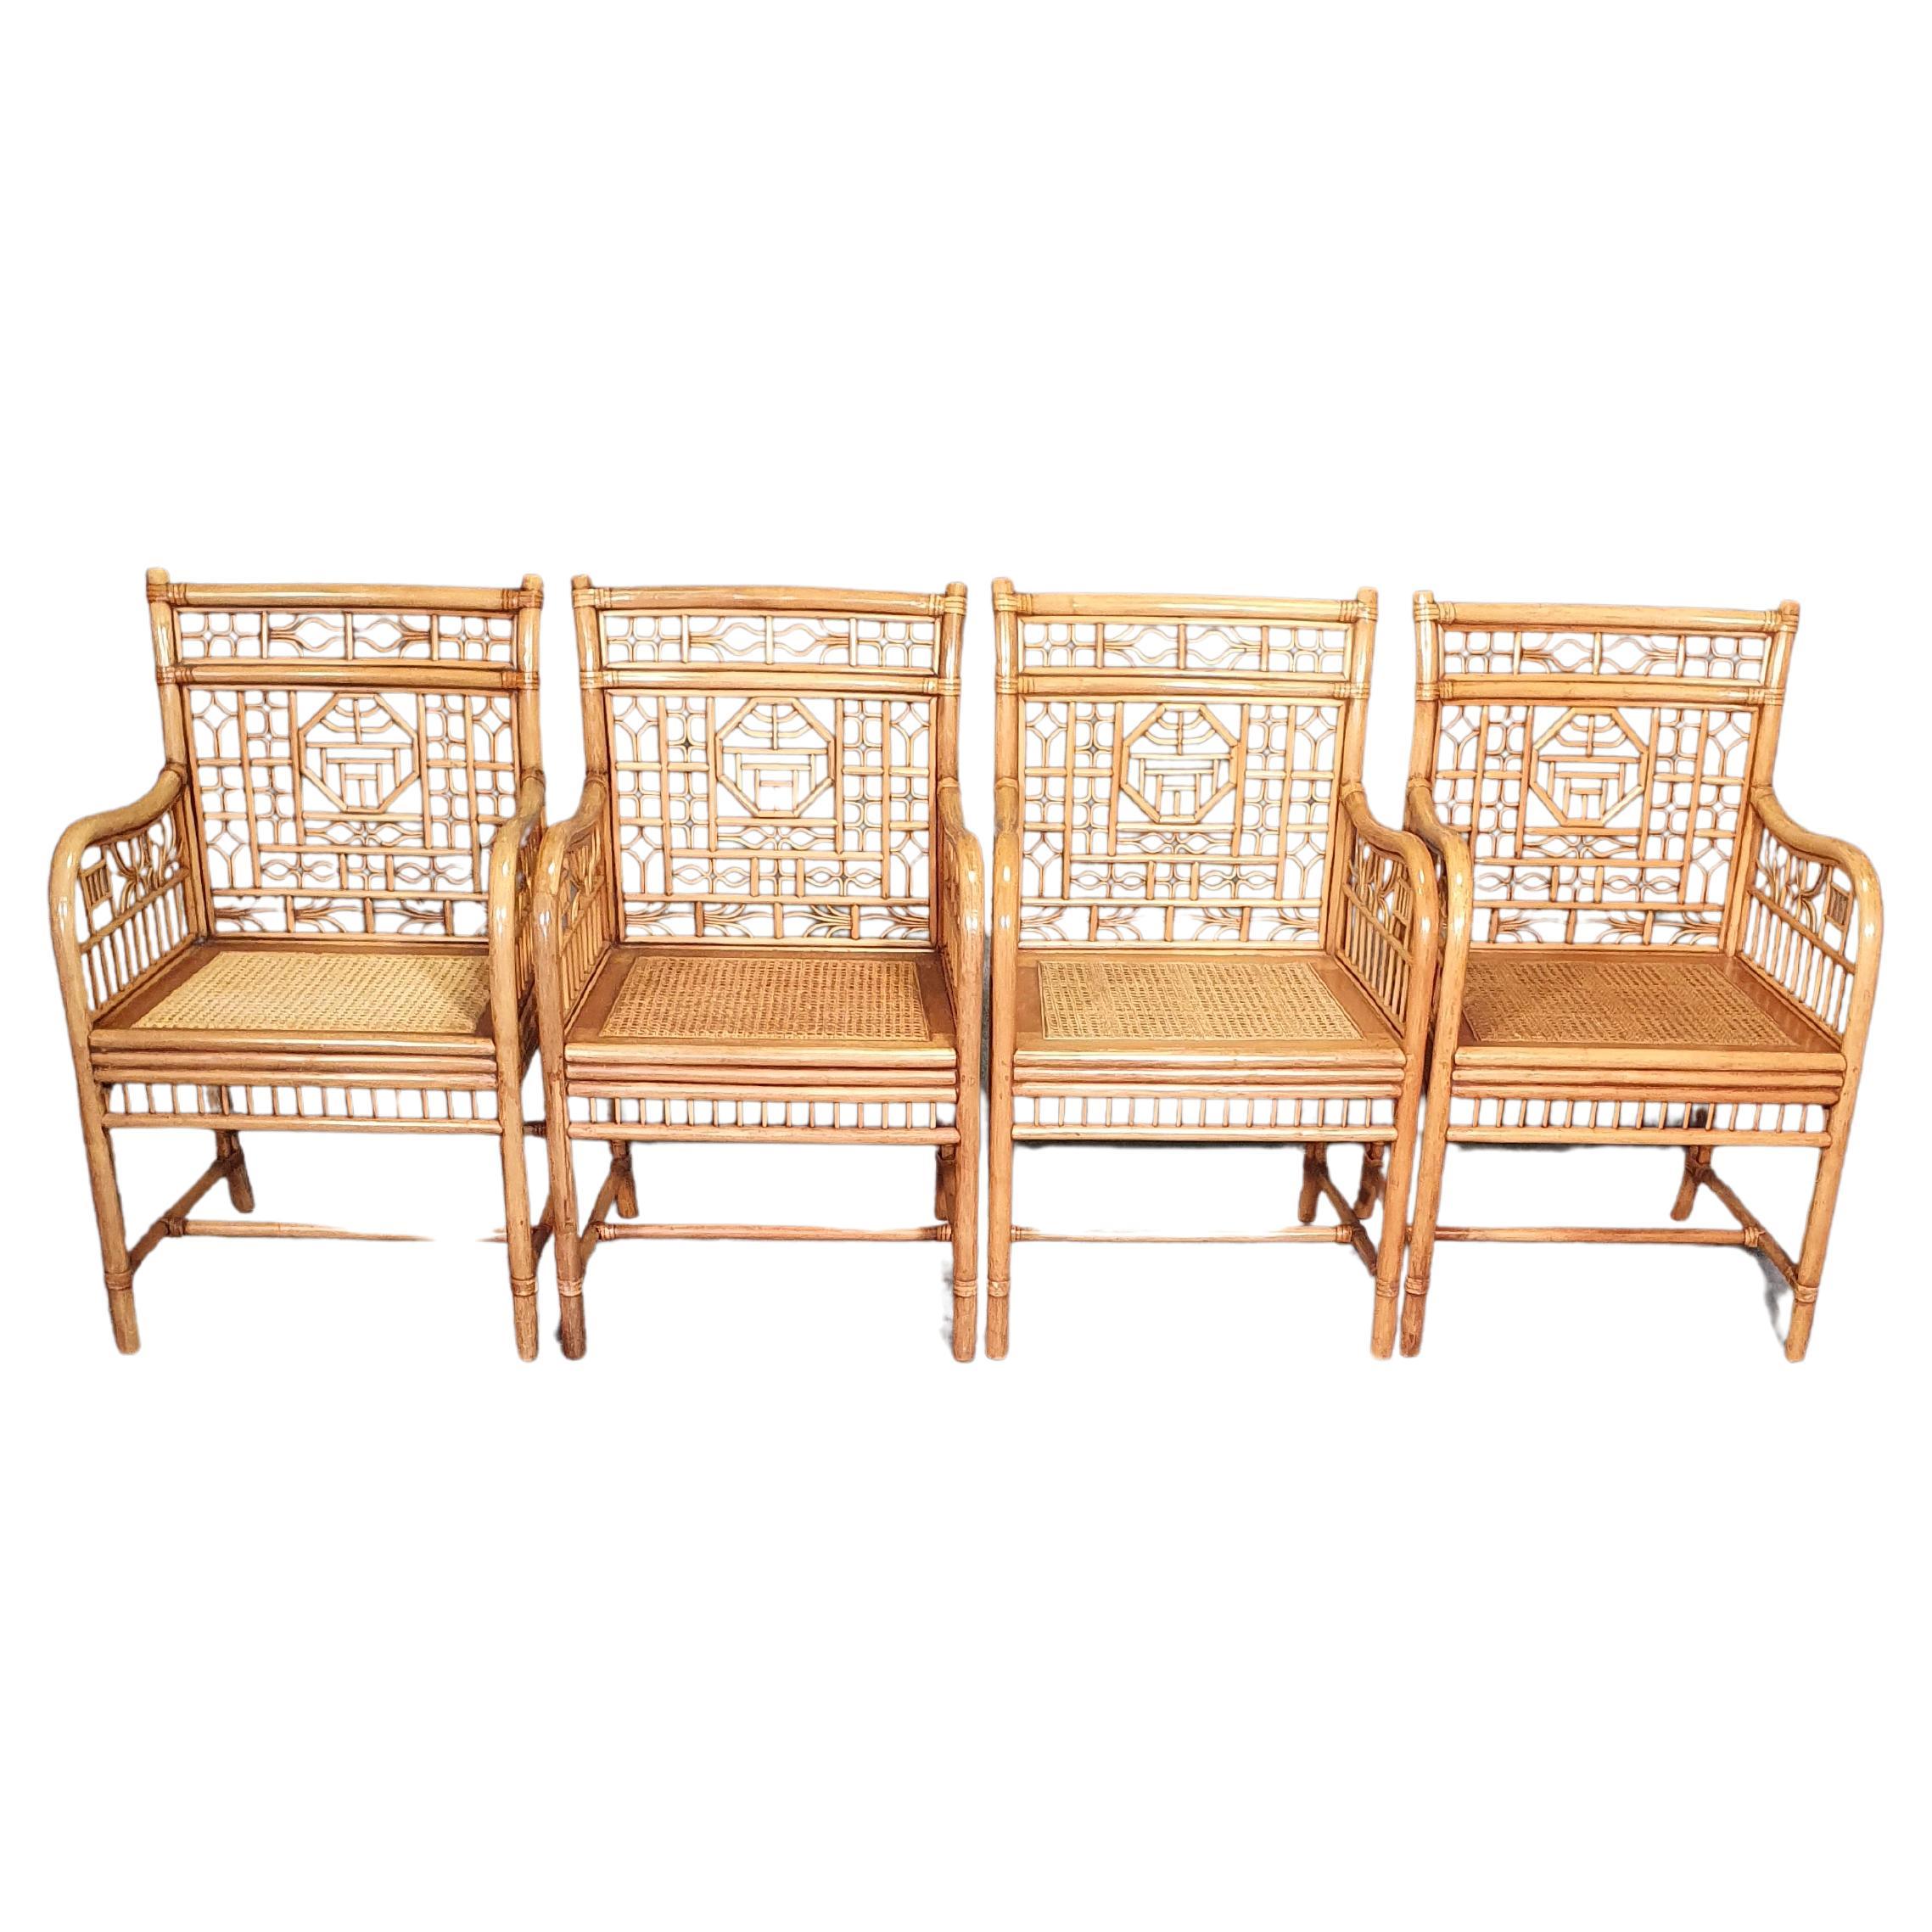 4 x Chaise en rotin Mcguire marquée Chinois / Chinoiserie Chique bamboo en vente